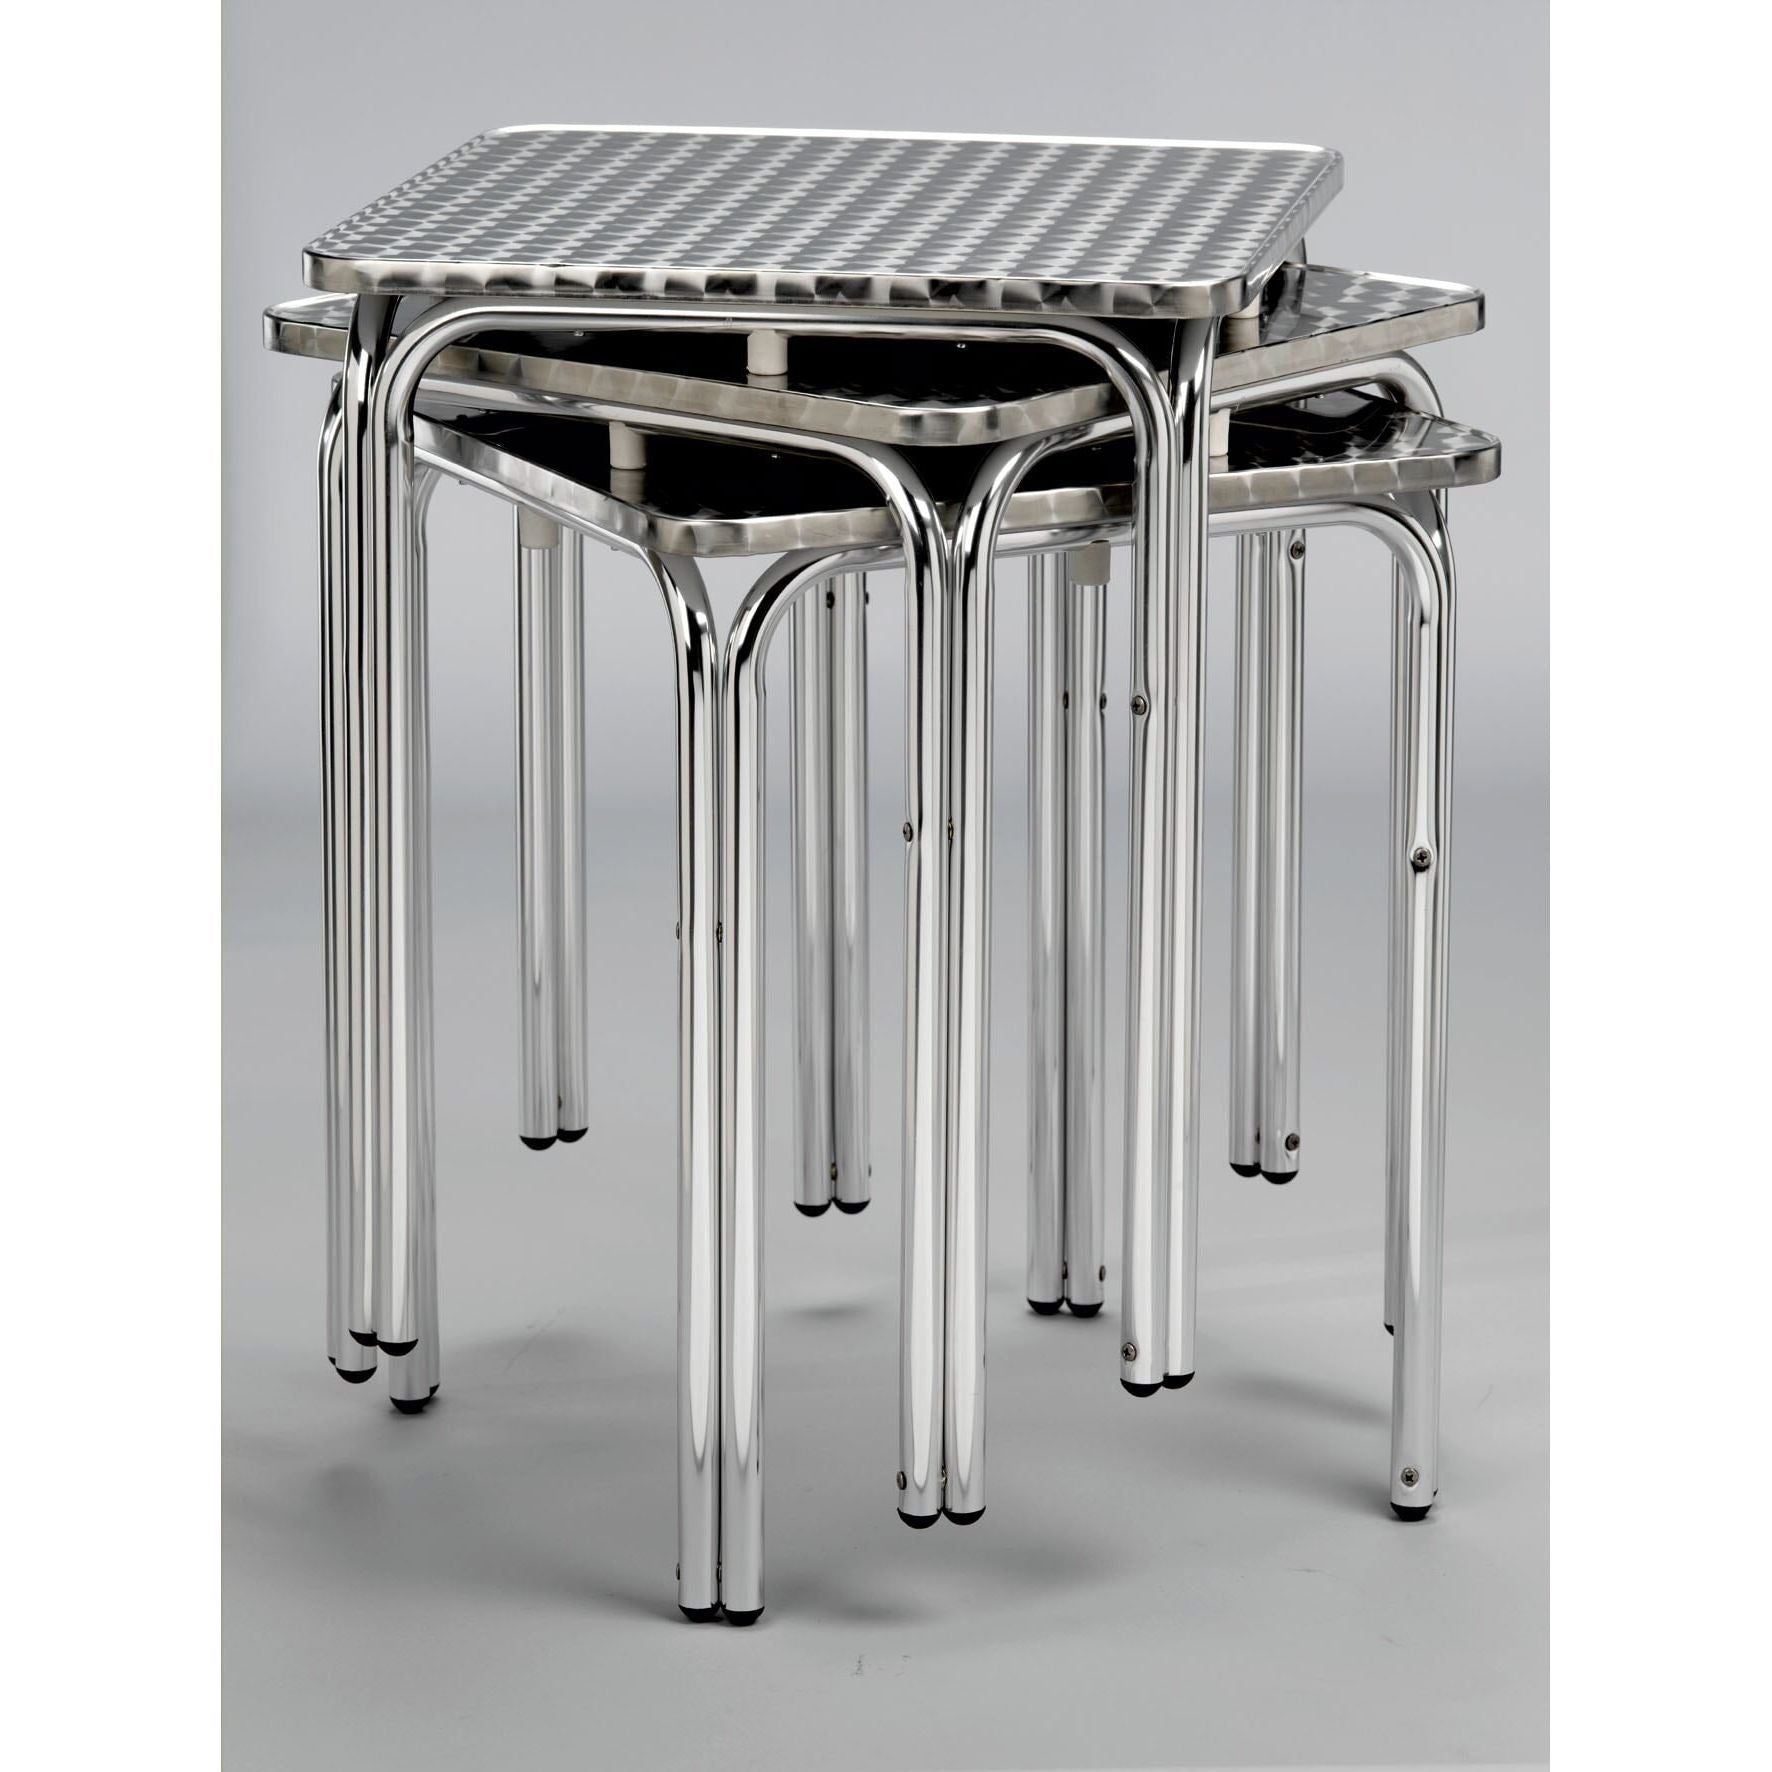 Garbar Raya Square Table Outdoor 60x60 Satinless gray